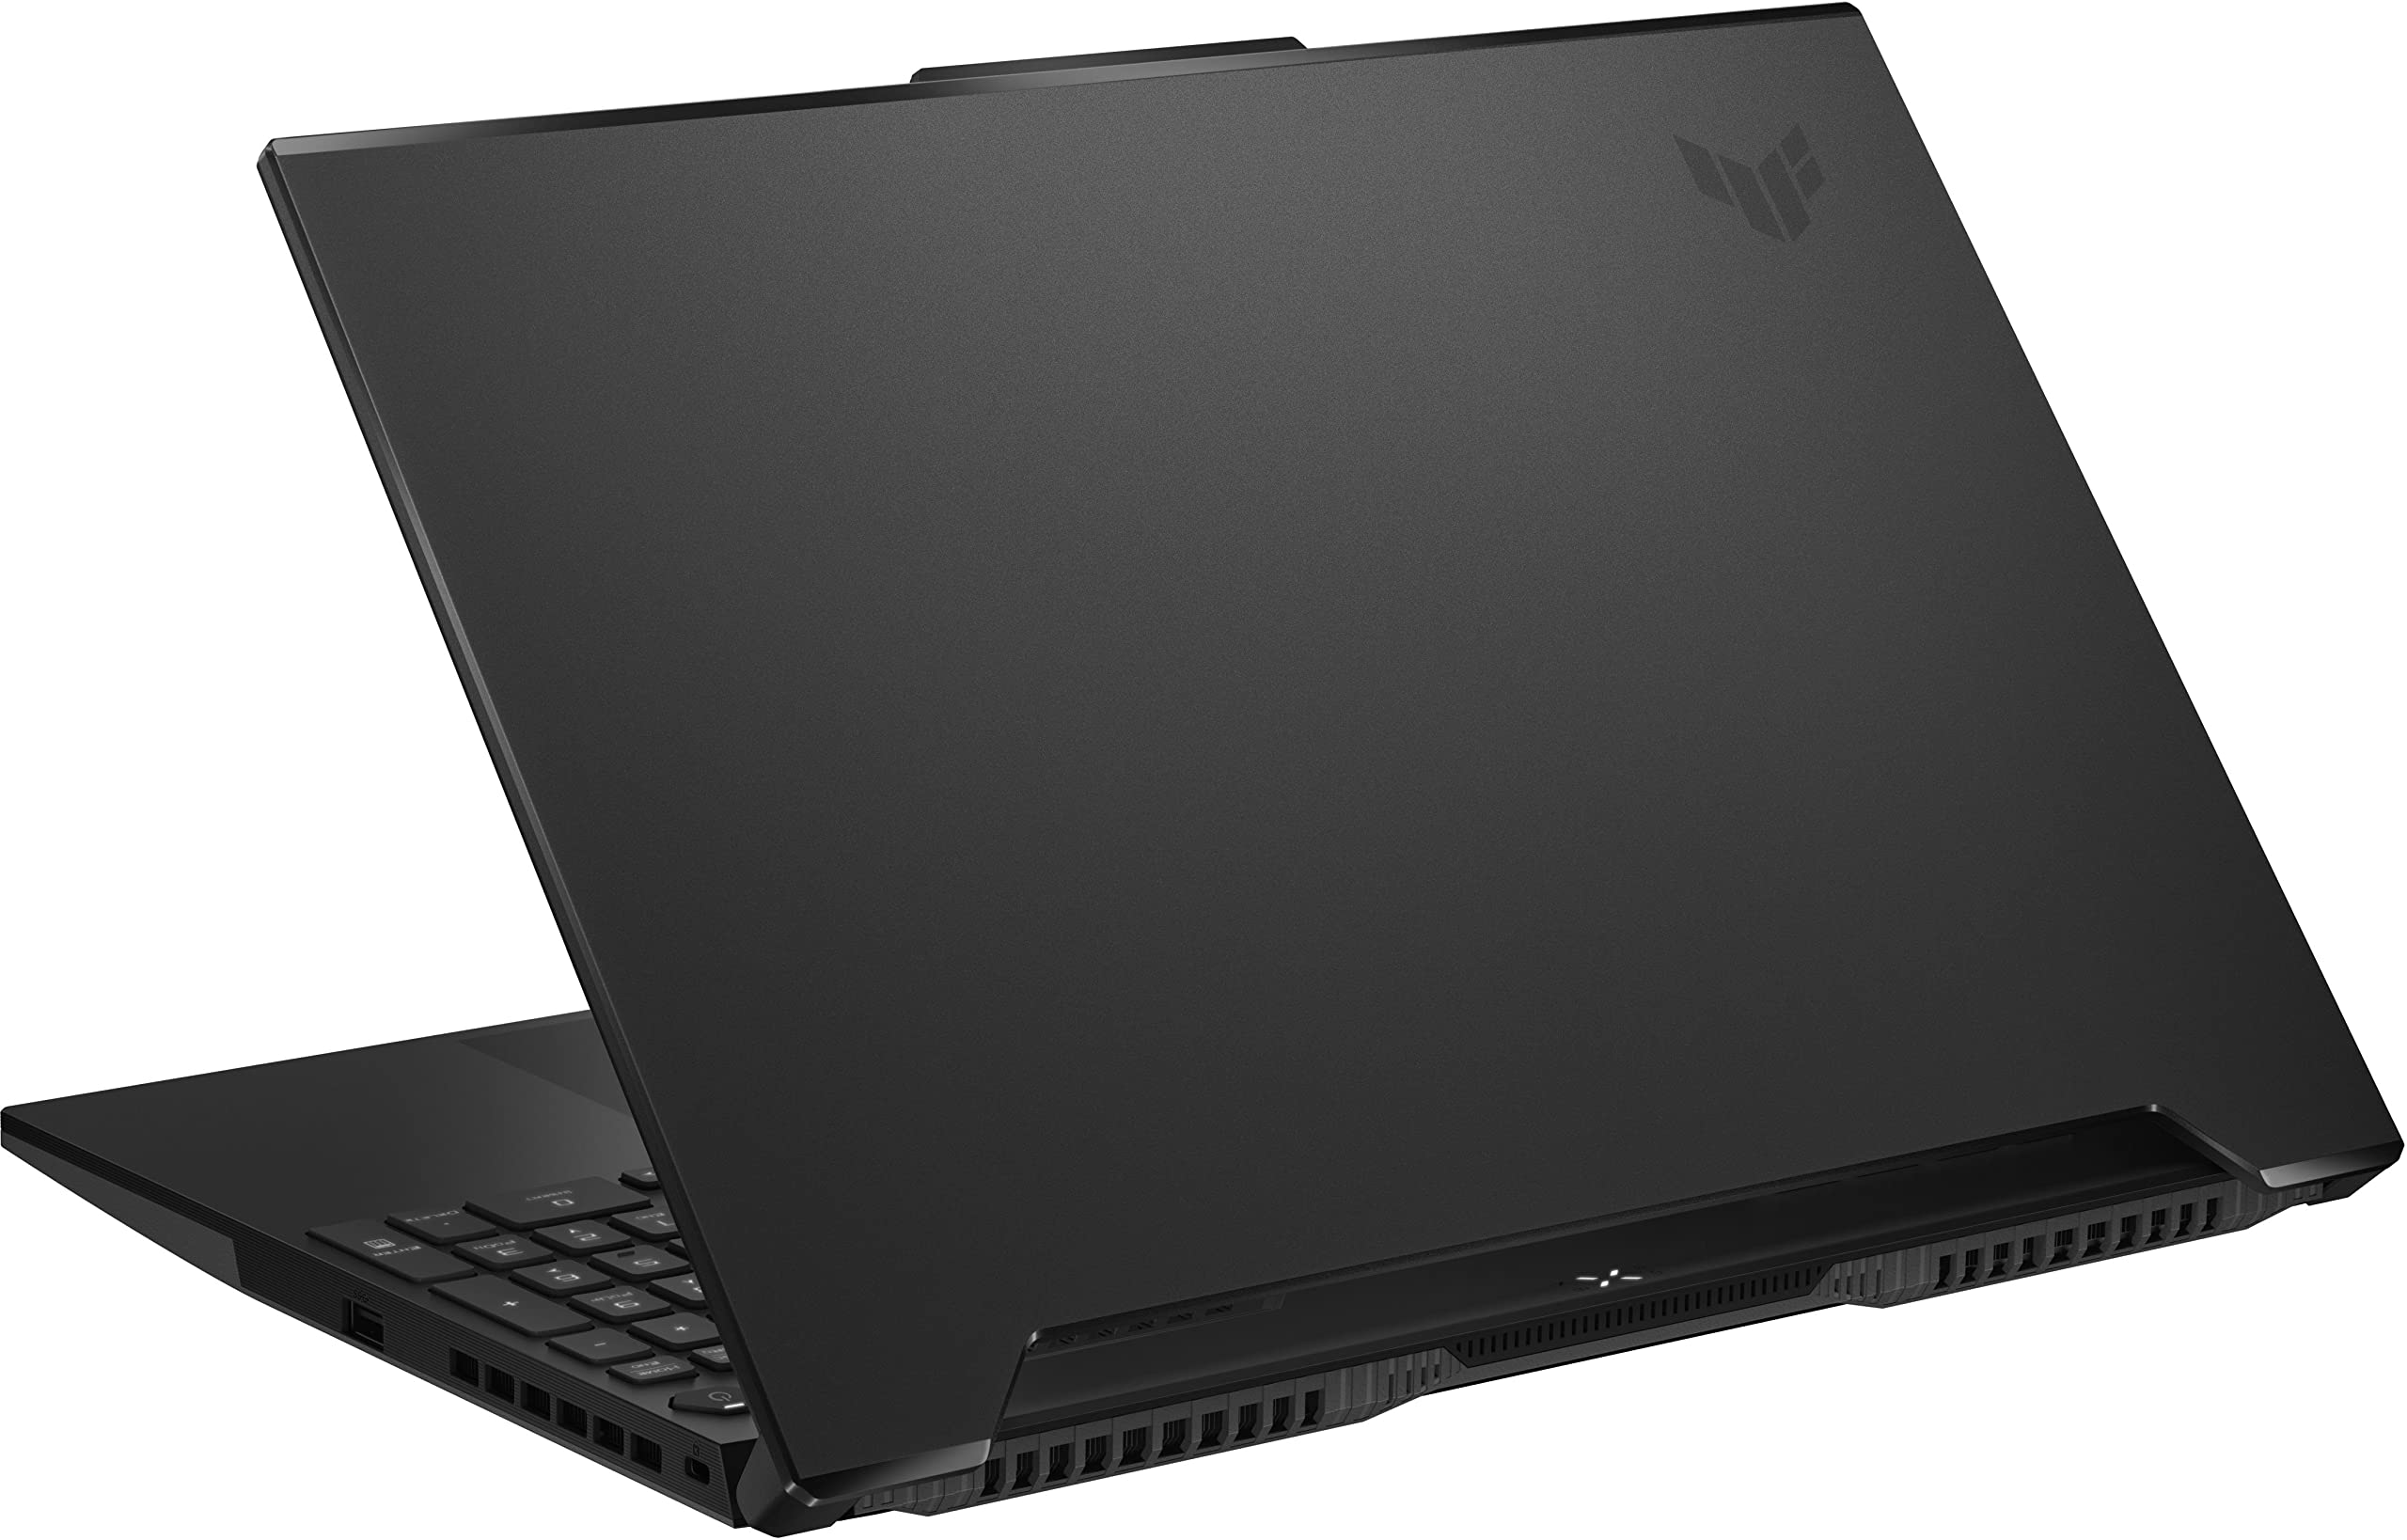 ASUS TUF Dash F15 Gaming Laptop 2022 15.6” 144Hz FHD Display 12th Intel i7-12650H 10-Core 16GB DDR5 1TB SSD NVIDIA GeForce RTX 3070 8GB GDDR6 WiFi 6 Thunderbolt Backlit KB RJ45 Win 10 Pro w/ONT USB